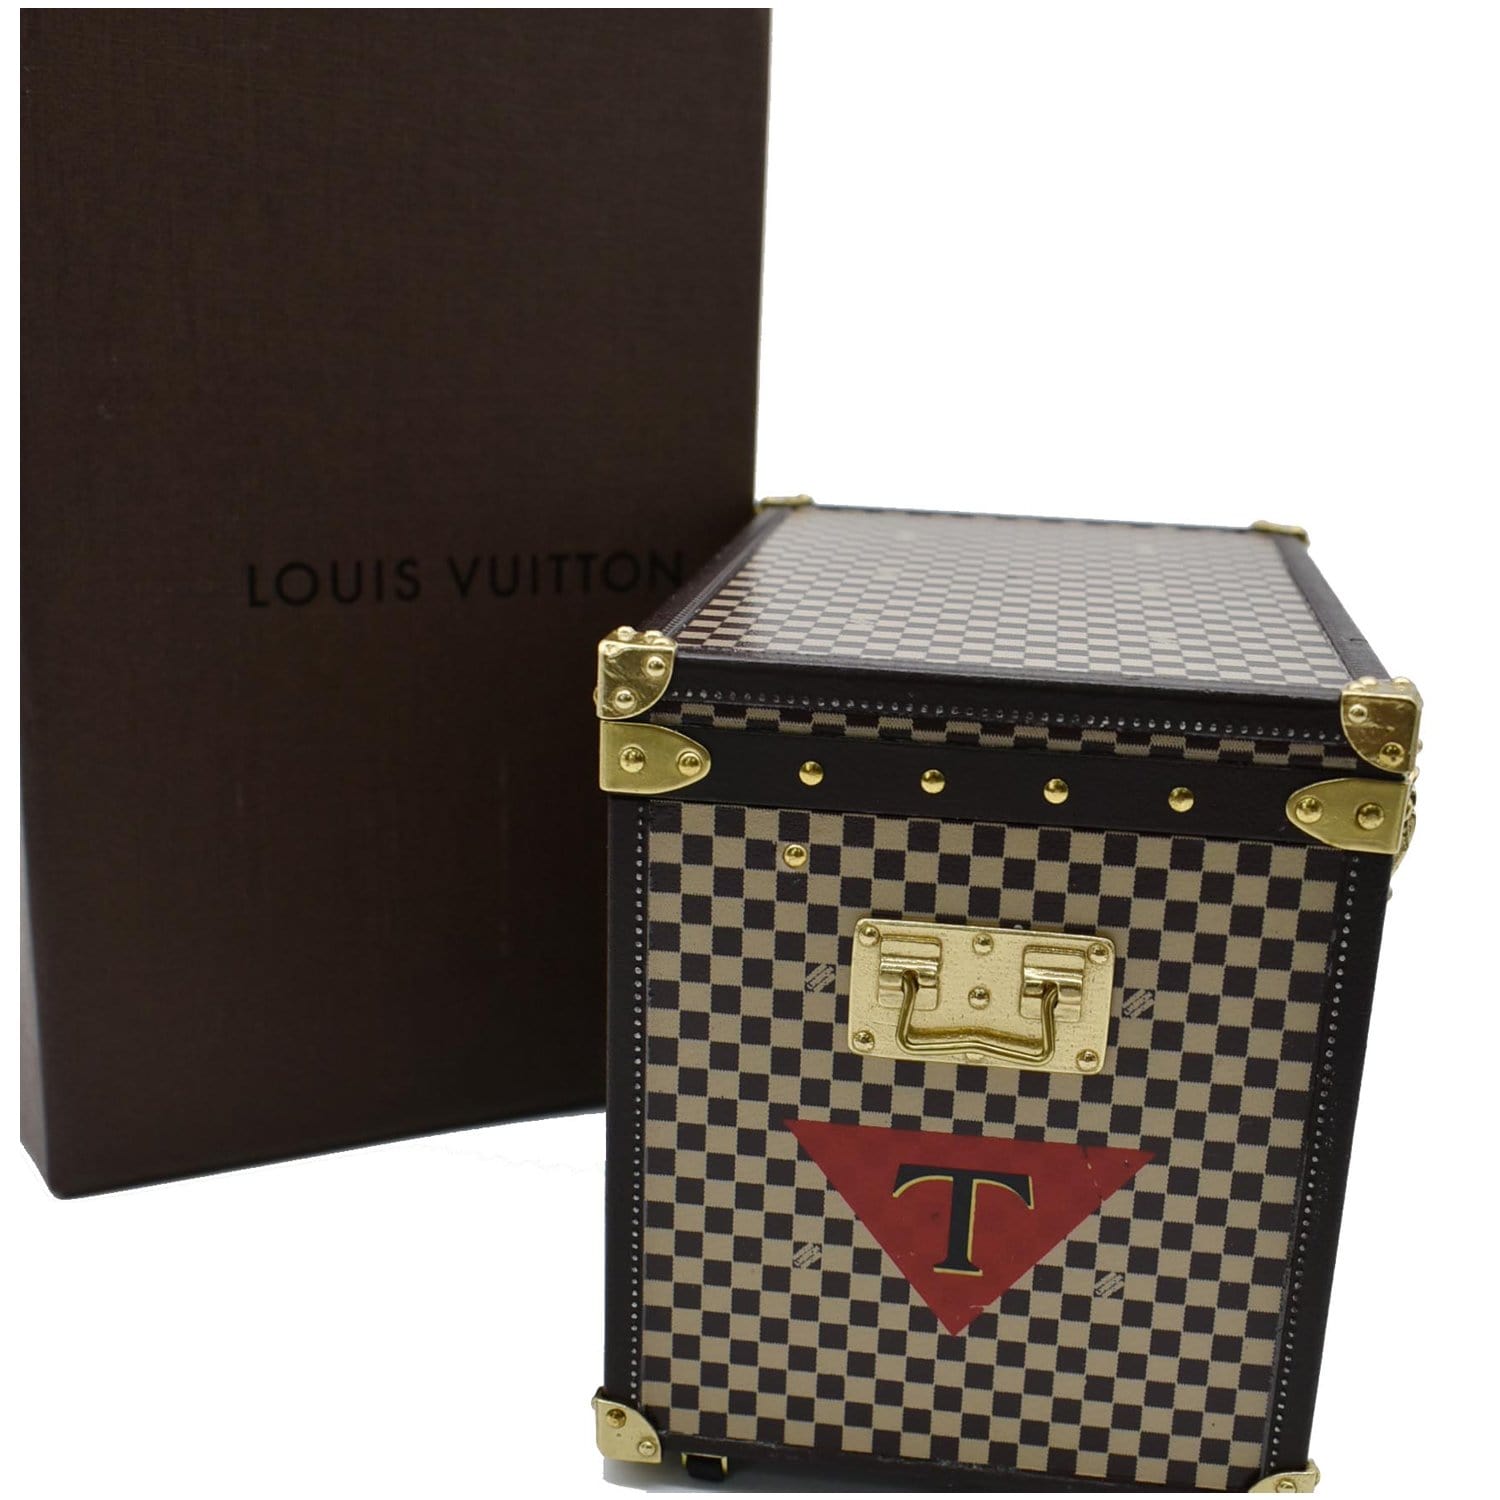 LOUIS VUITTON MINI MALLE CHAPEAUX VIP gift Hats Trunk Jewelry box Damier